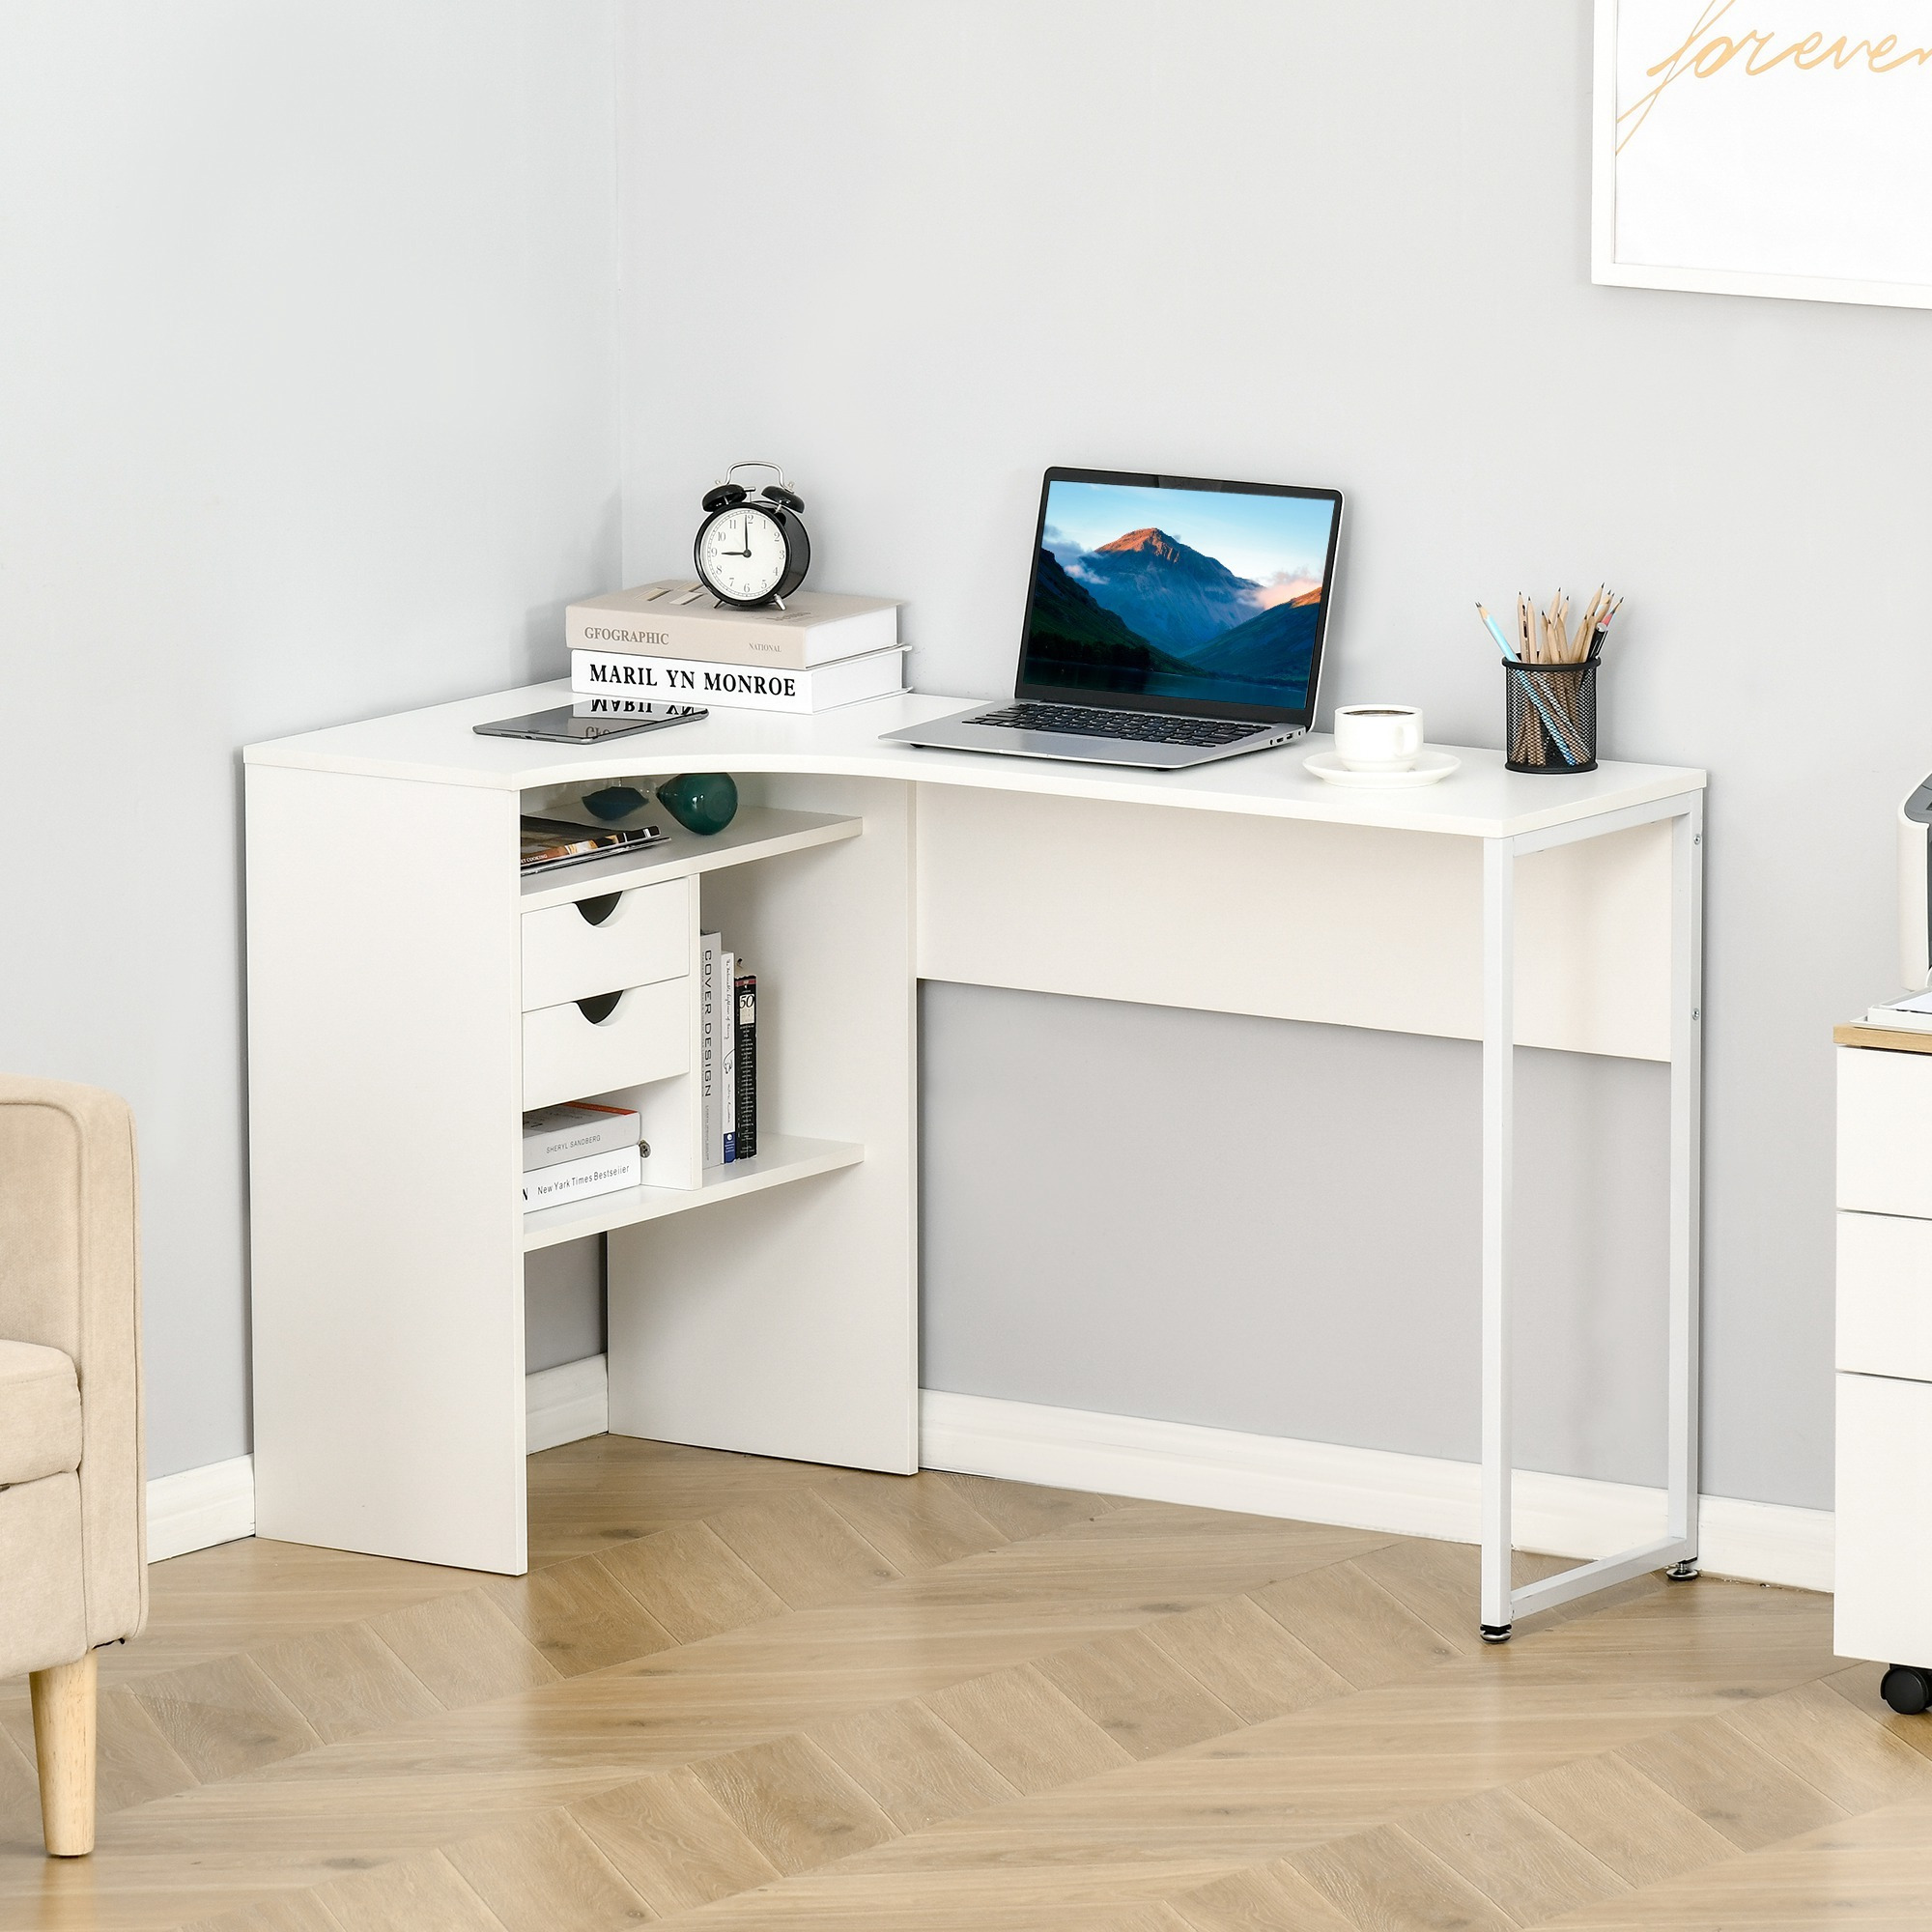 https://static.ufurnish.com/assets%2Fproduct-images%2Faosom%2F836-435wt%2Fhomcom-l-shaped-corner-computer-desk-study-table-pc-work-w-storage-shelf-drawer-smooth-slide-office-home-workstation-space-saving-white-7cd3bec6.jpg